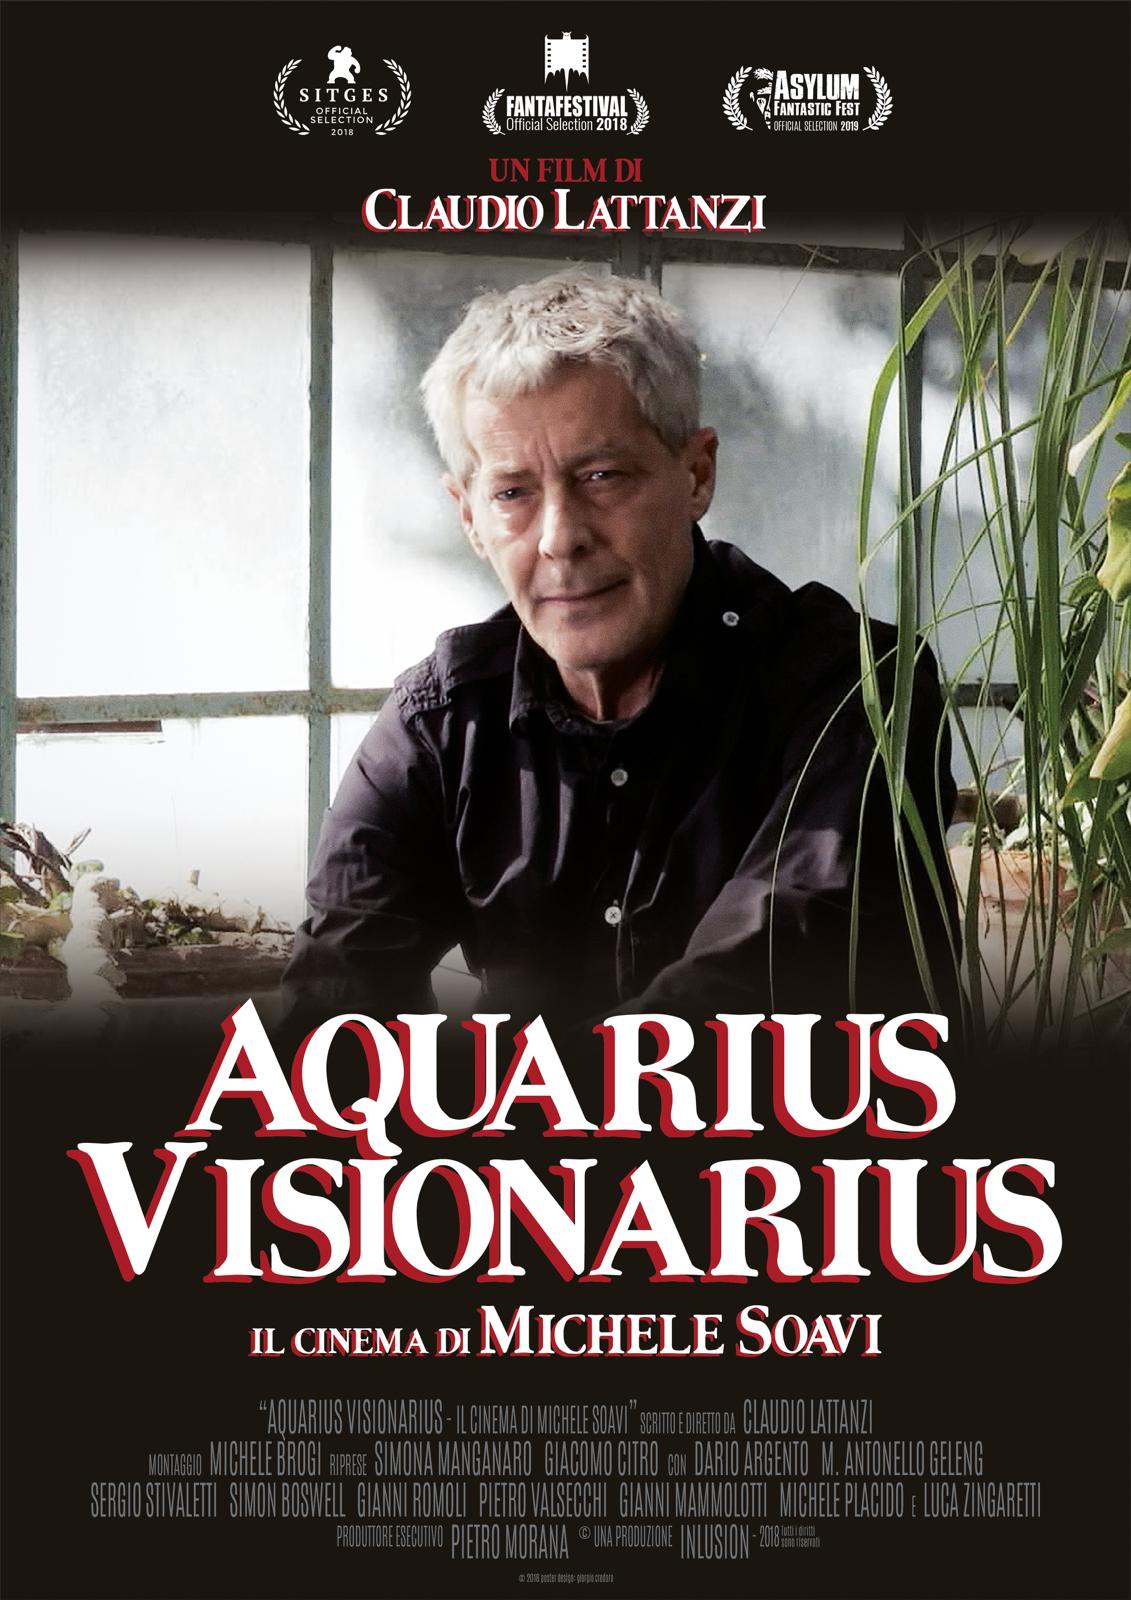 Aquarius Visionarius - Il cinema di Michele Soavi (2018) Screenshot 1